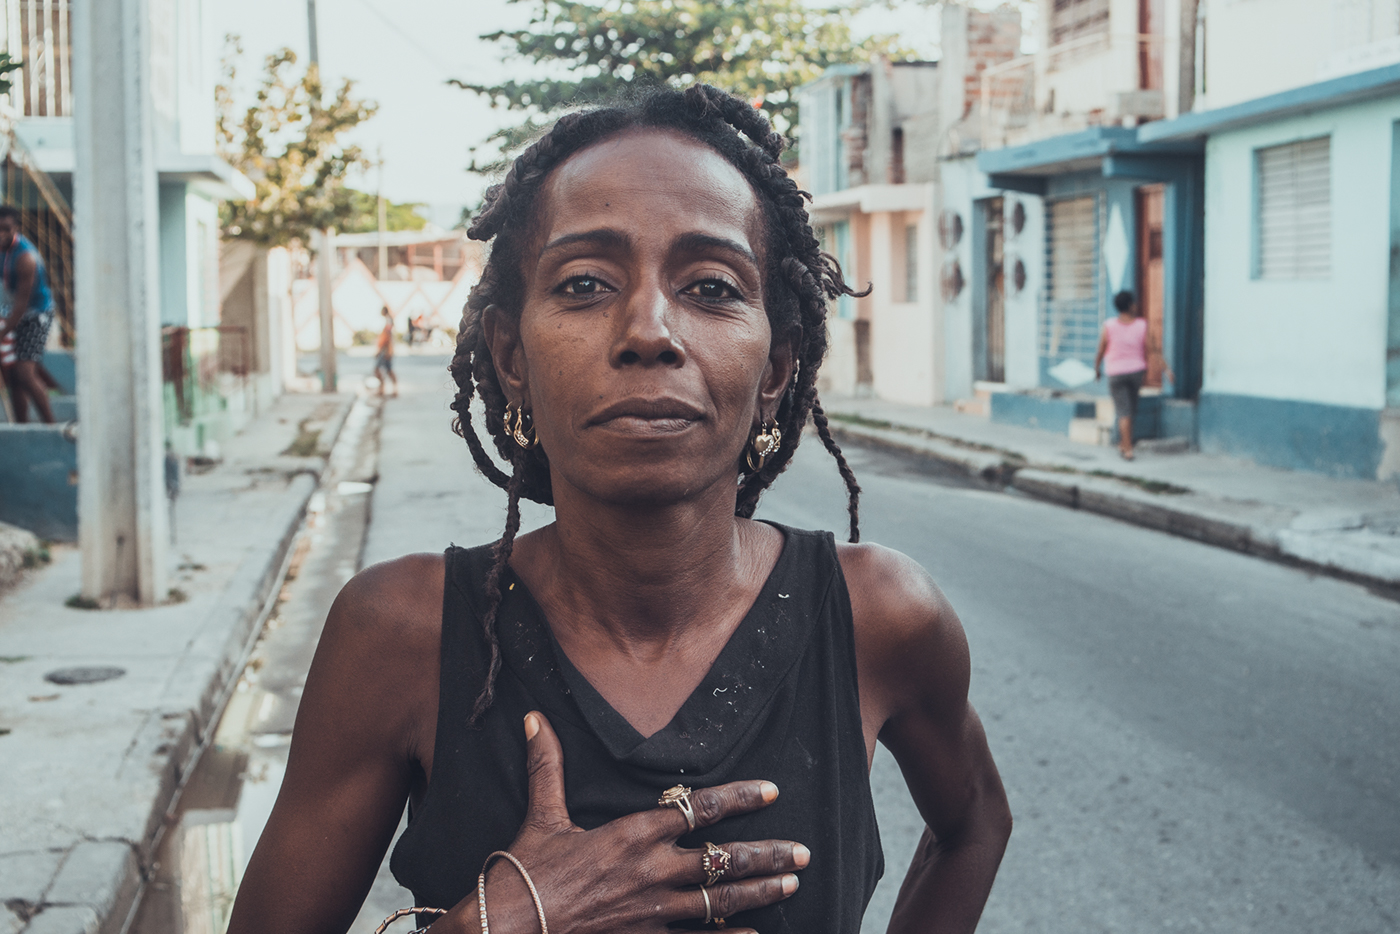 cuba portrait streetphotography Travel havana Trinidad vinales grading cinematic portraits